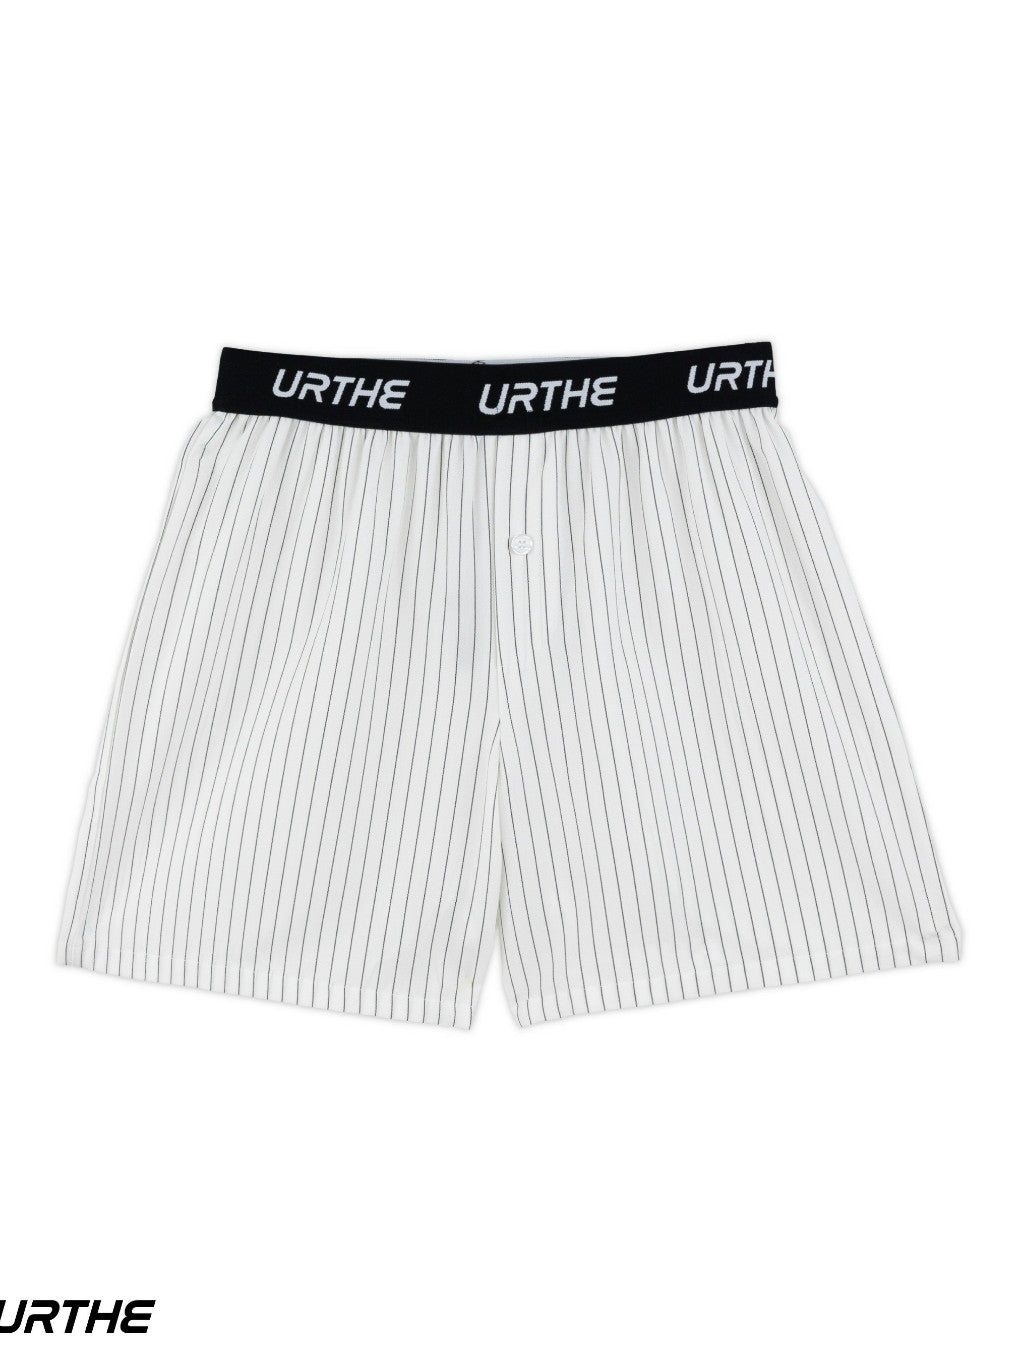 URTHE - กางเกง Boxer ขาสั้น เอวยางยืด รุ่น XER